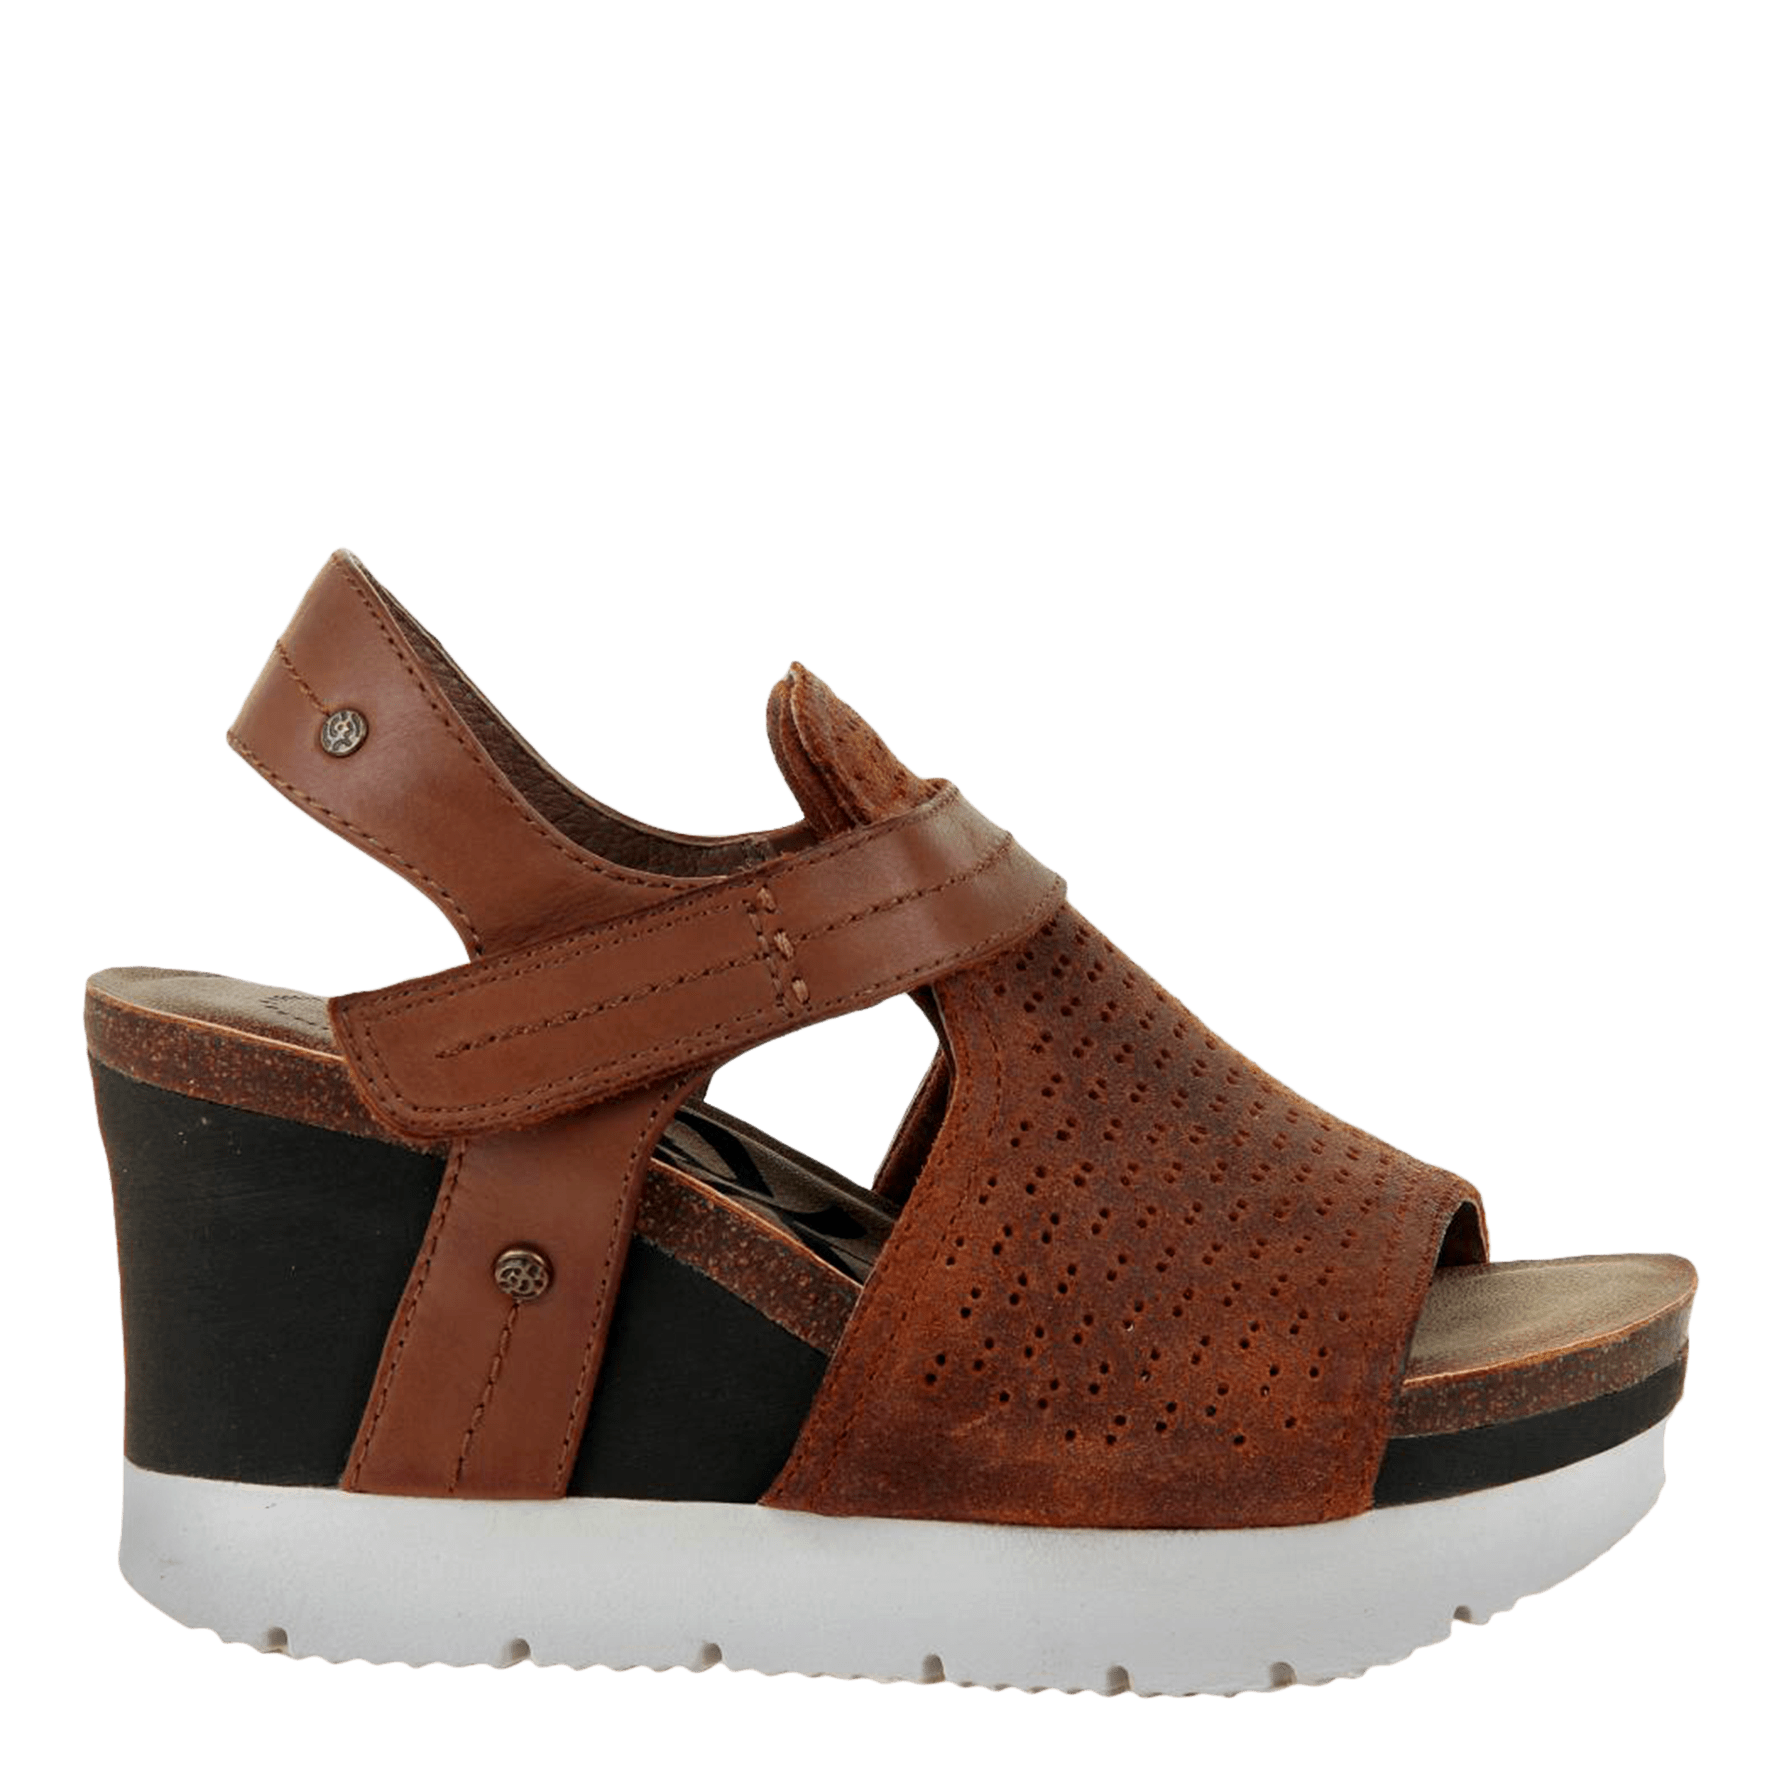 Waypoint in New Tan Wedge Sandals 